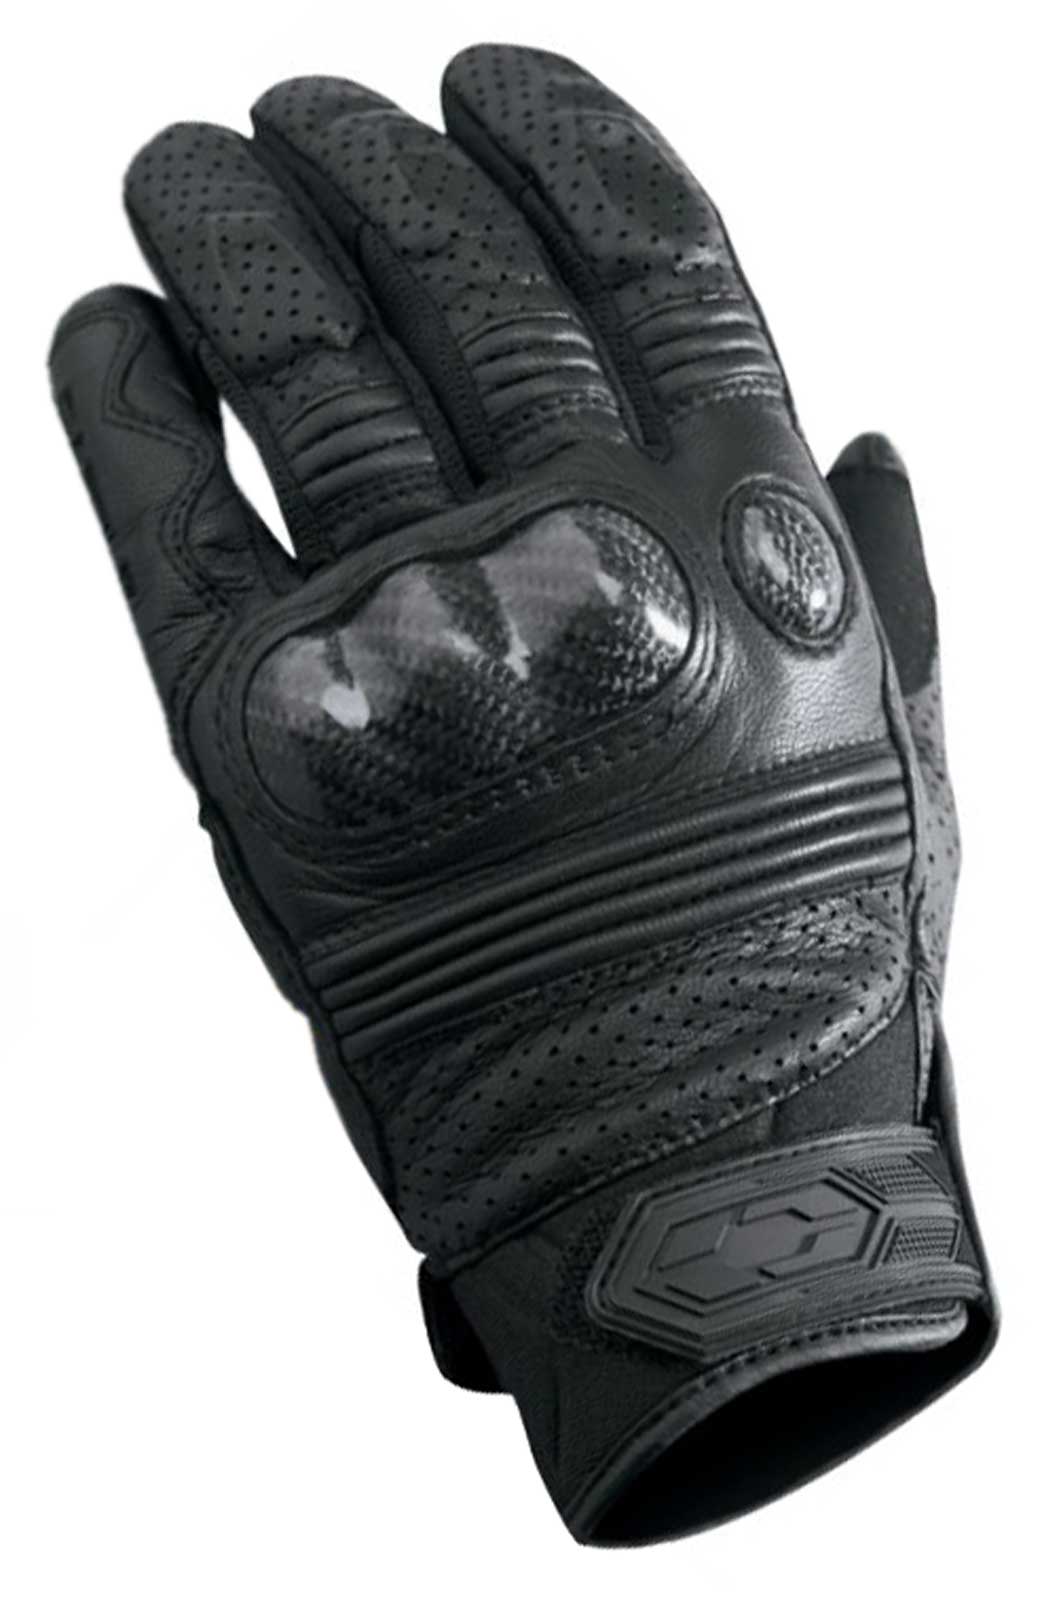 Men’s Leather Riding Glove w/ Gel Palm & Flex Knuckles w/ Touch Screen Fingers 